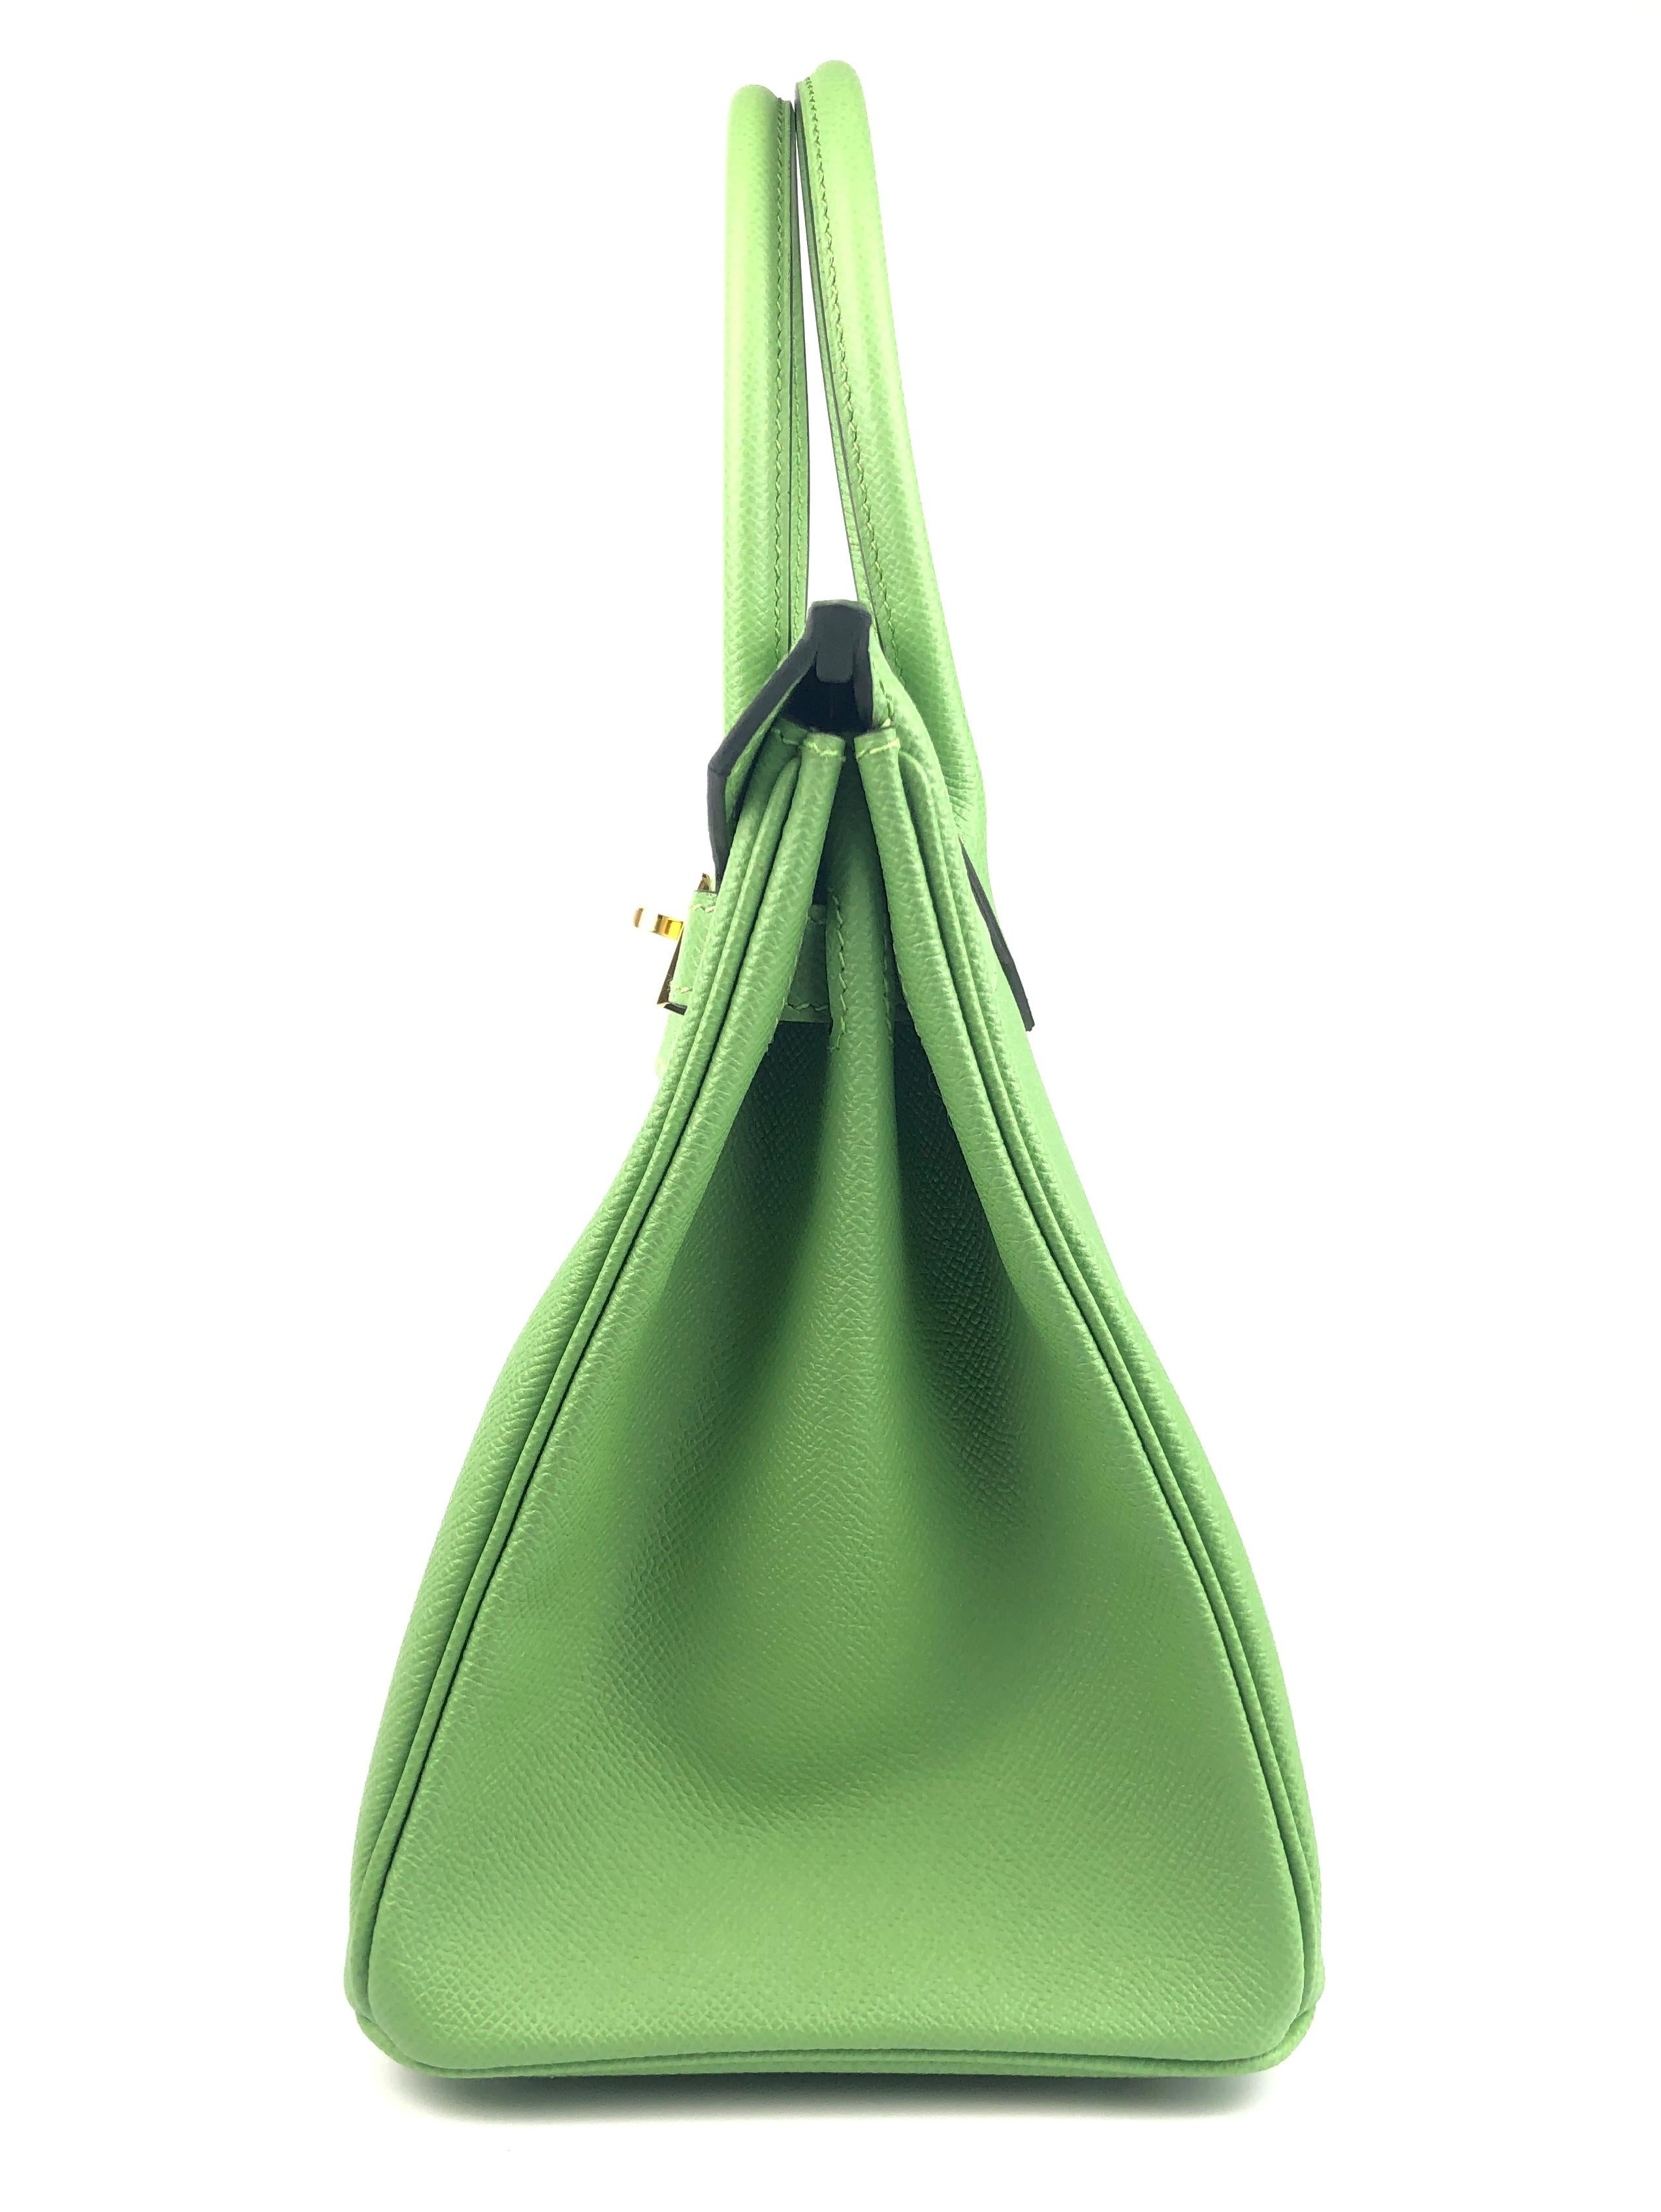 Hermes Birkin 30 Vert Criquet Green Epsom Leather Handbag Gold Hardware 2020 1